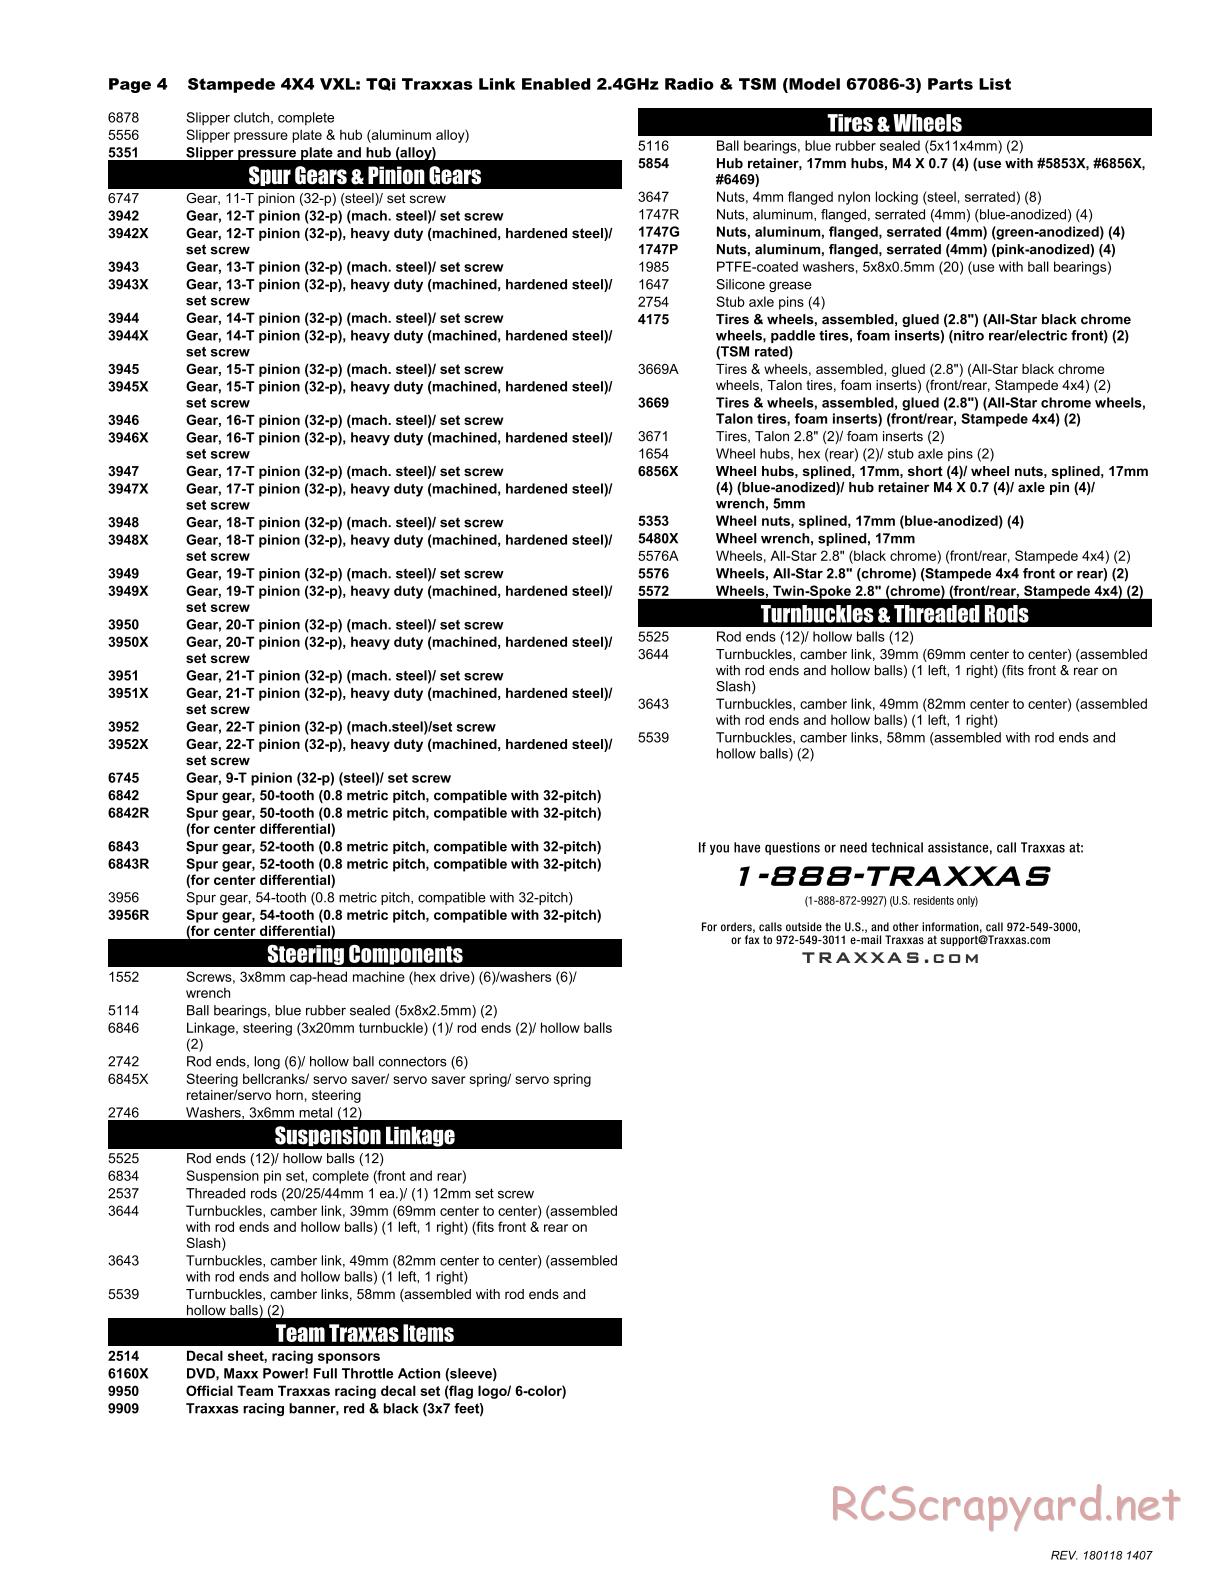 Traxxas - Stampede 4x4 VXL TSM (2015) - Parts List - Page 4